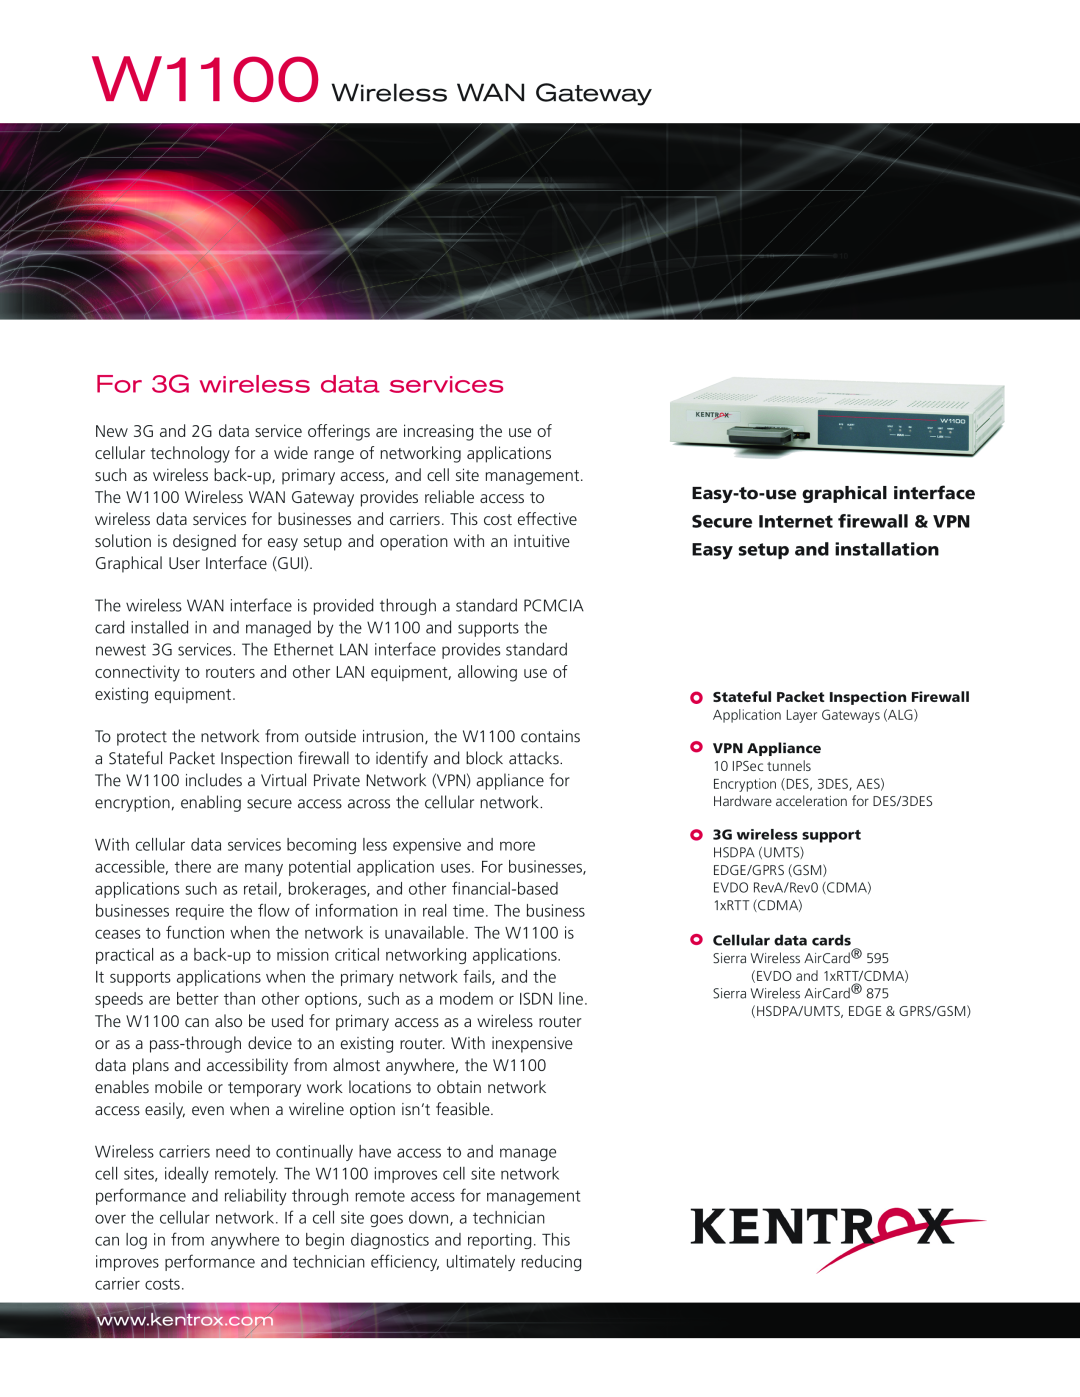 Kentrox manual For 3G wireless data services, W1100 Wireless WAN Gateway 